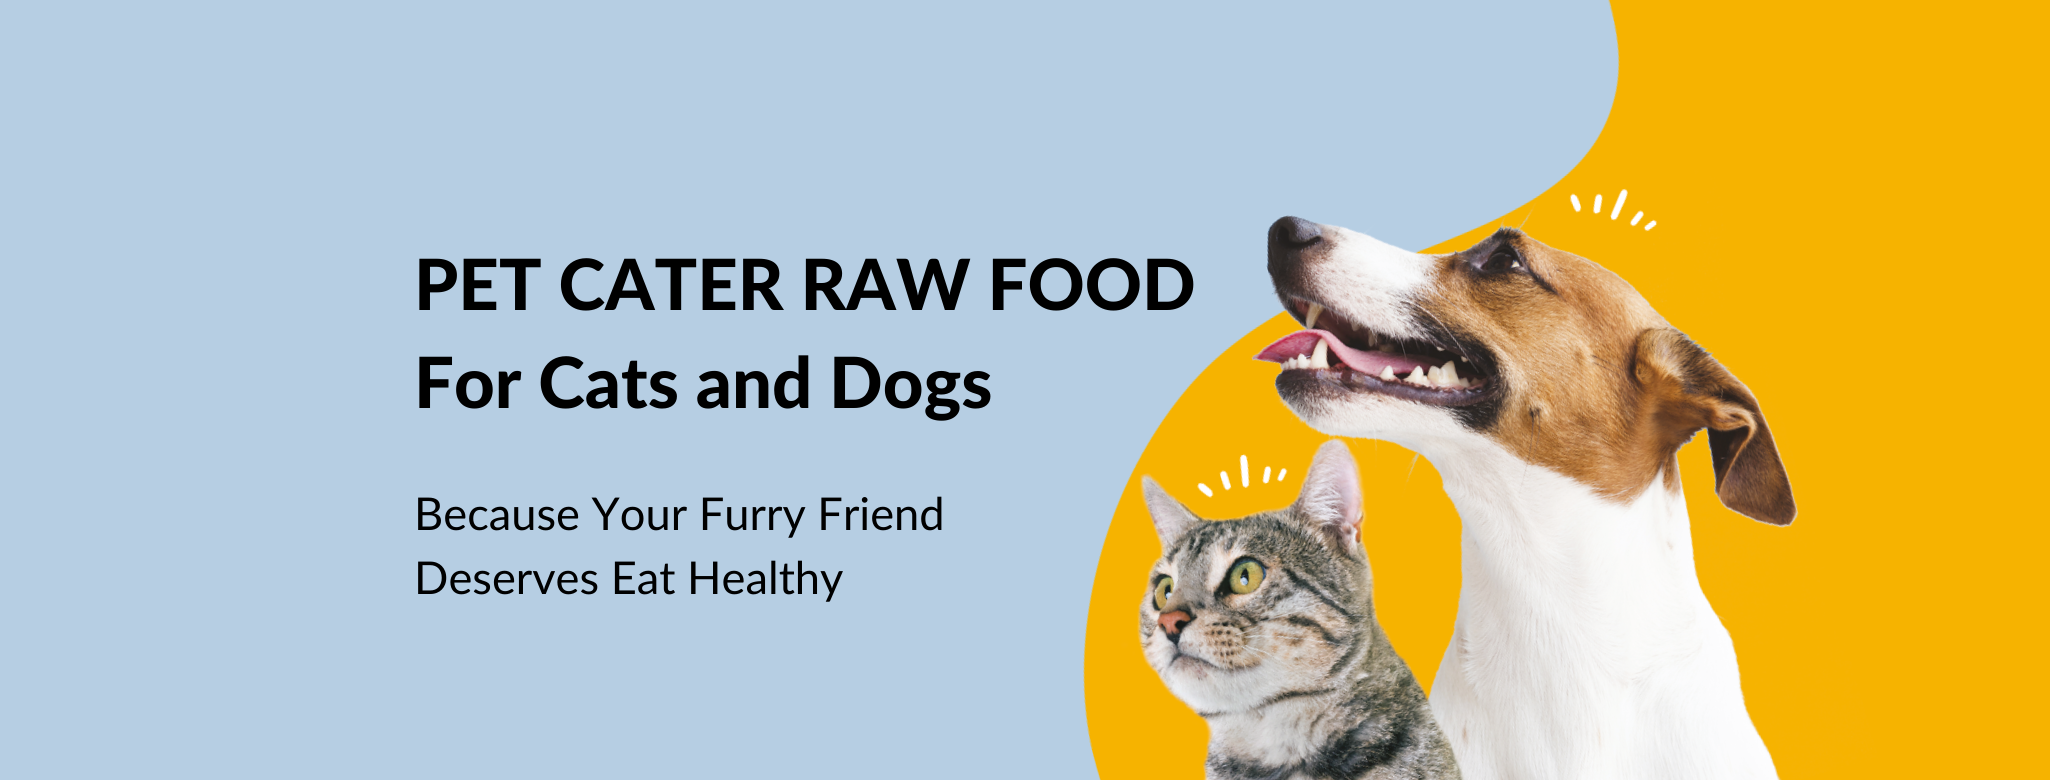 Pet Cater Raw Food